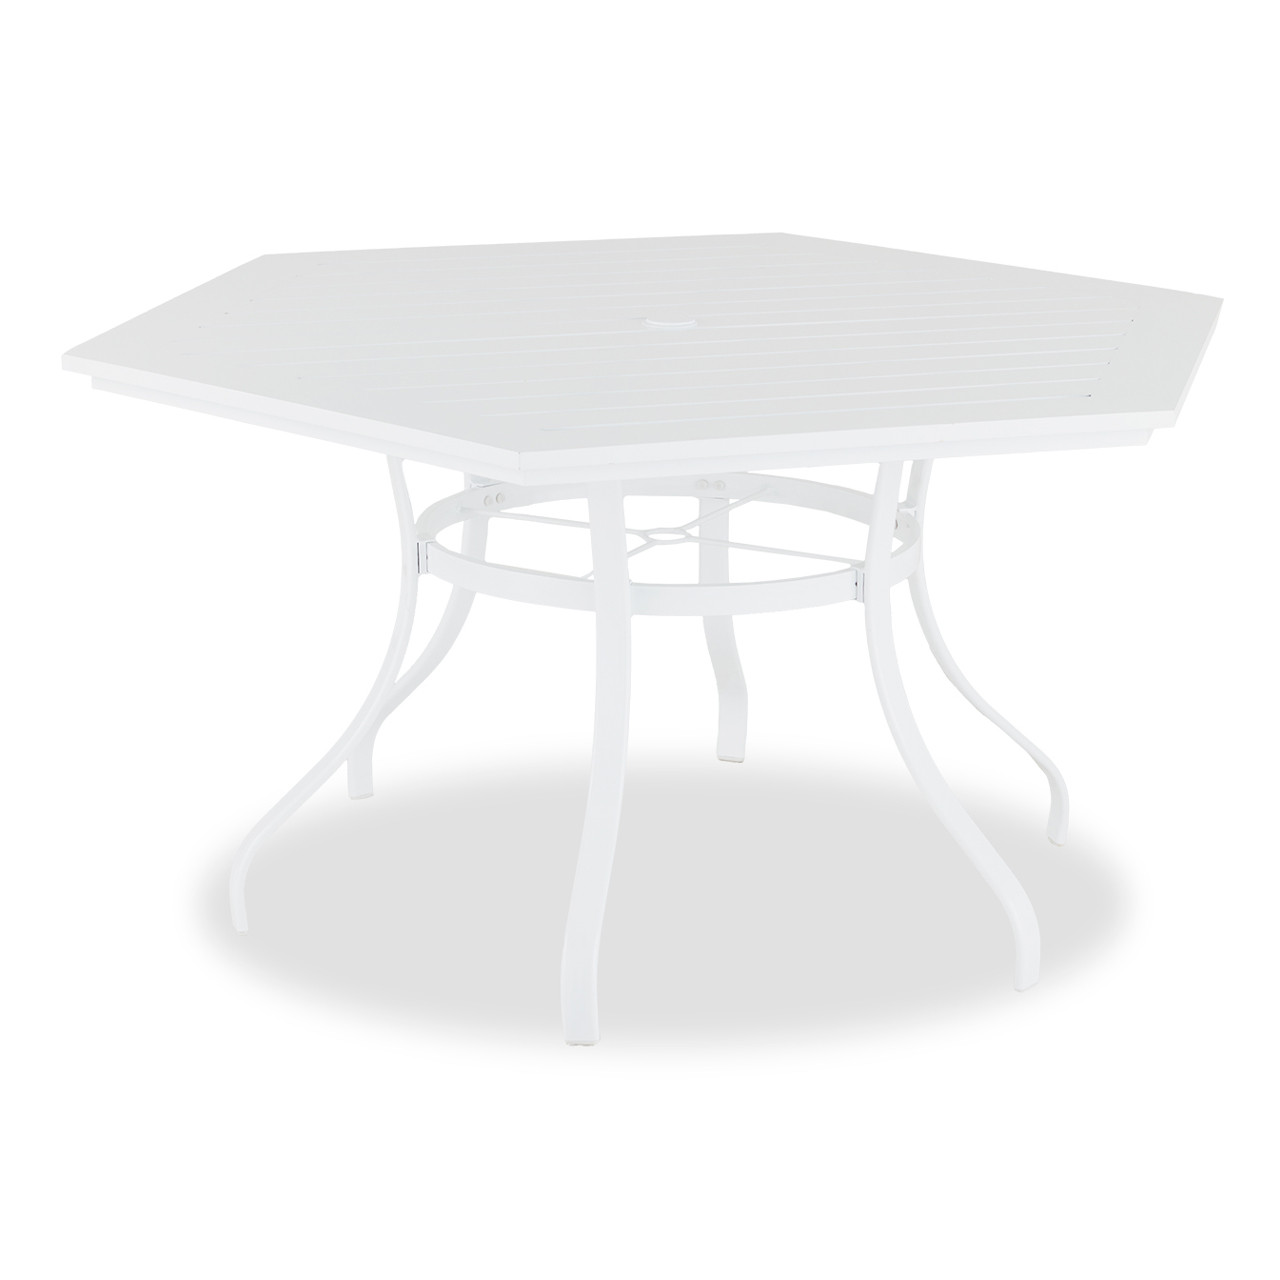 Cape Coral Aluminum 60 in. D Hexagonal Slat Top Dining Table